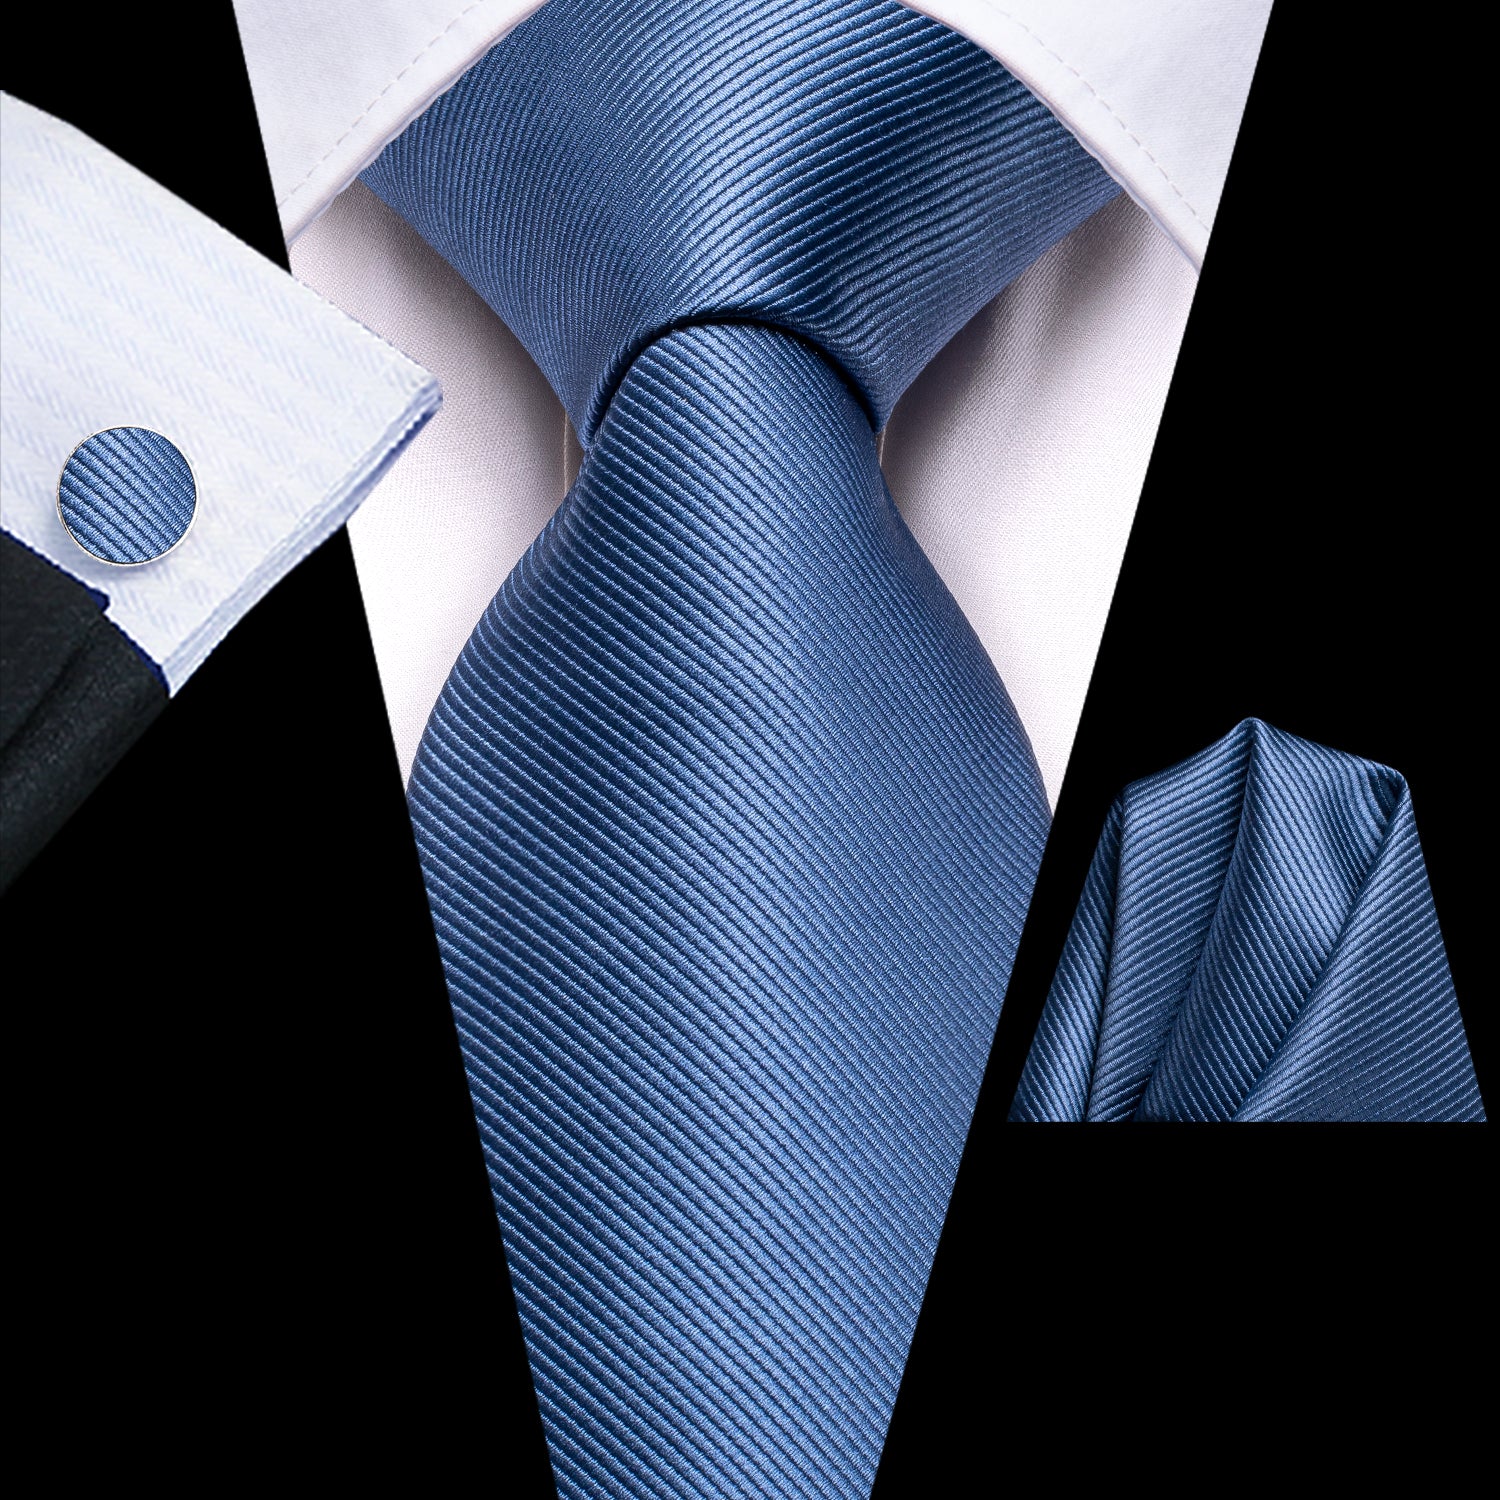 Dusty Blue Solid Tie Pocket Square Cufflinks Set